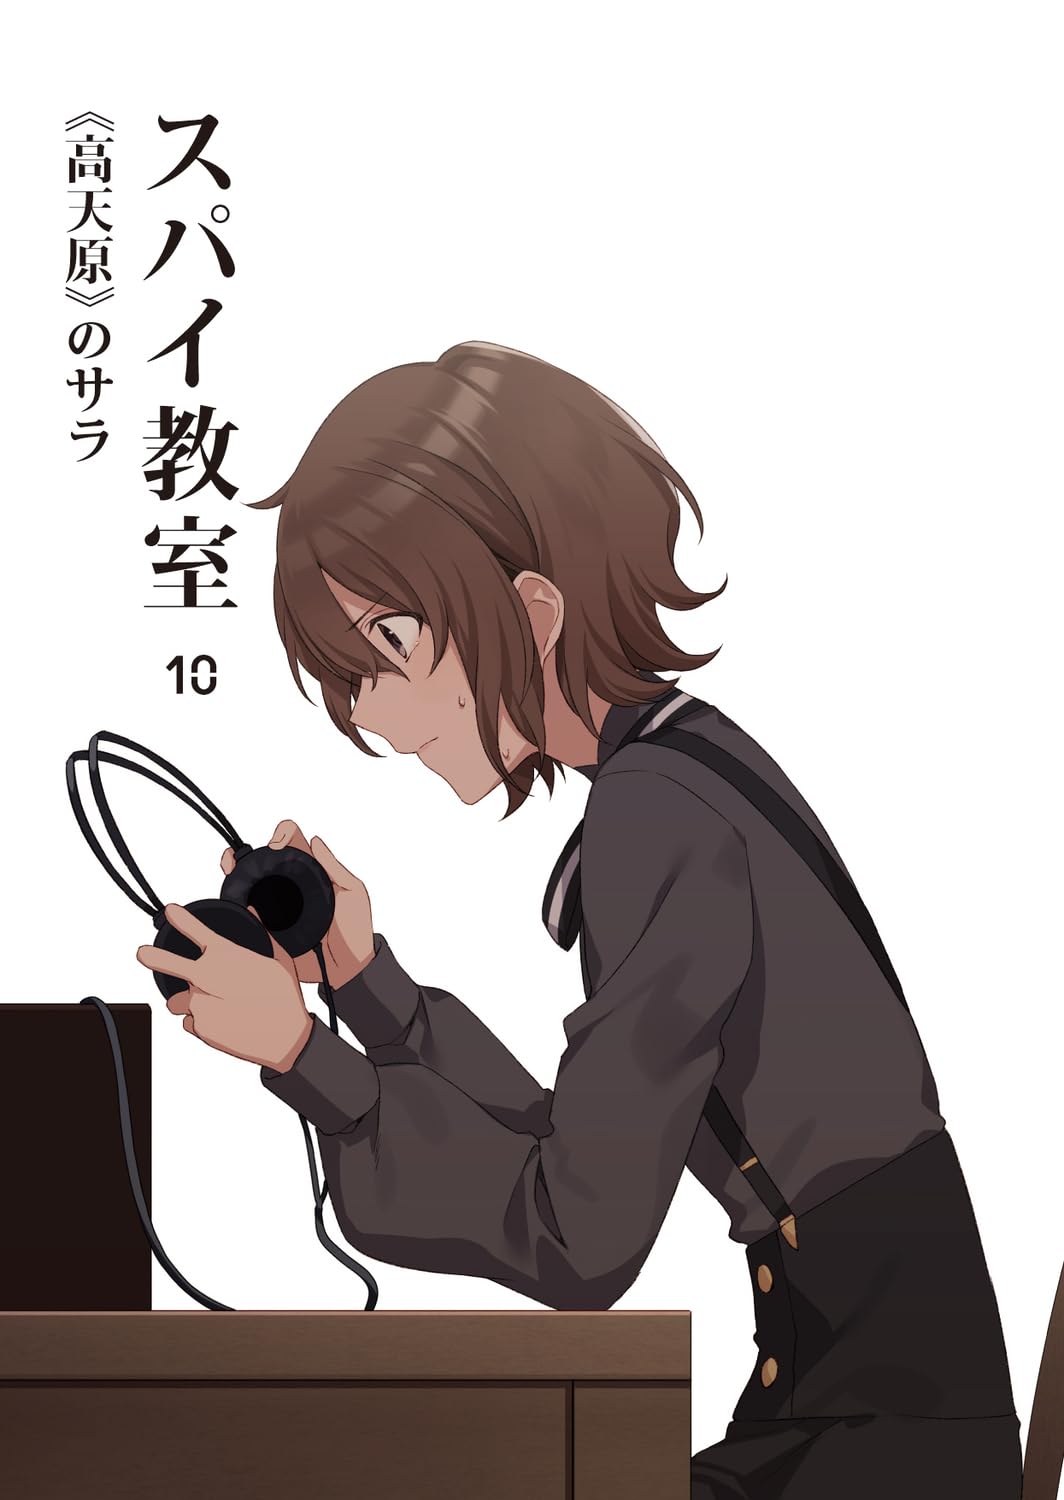  Anime Manga Spy Classroom Merch Spy Kyoushitsu